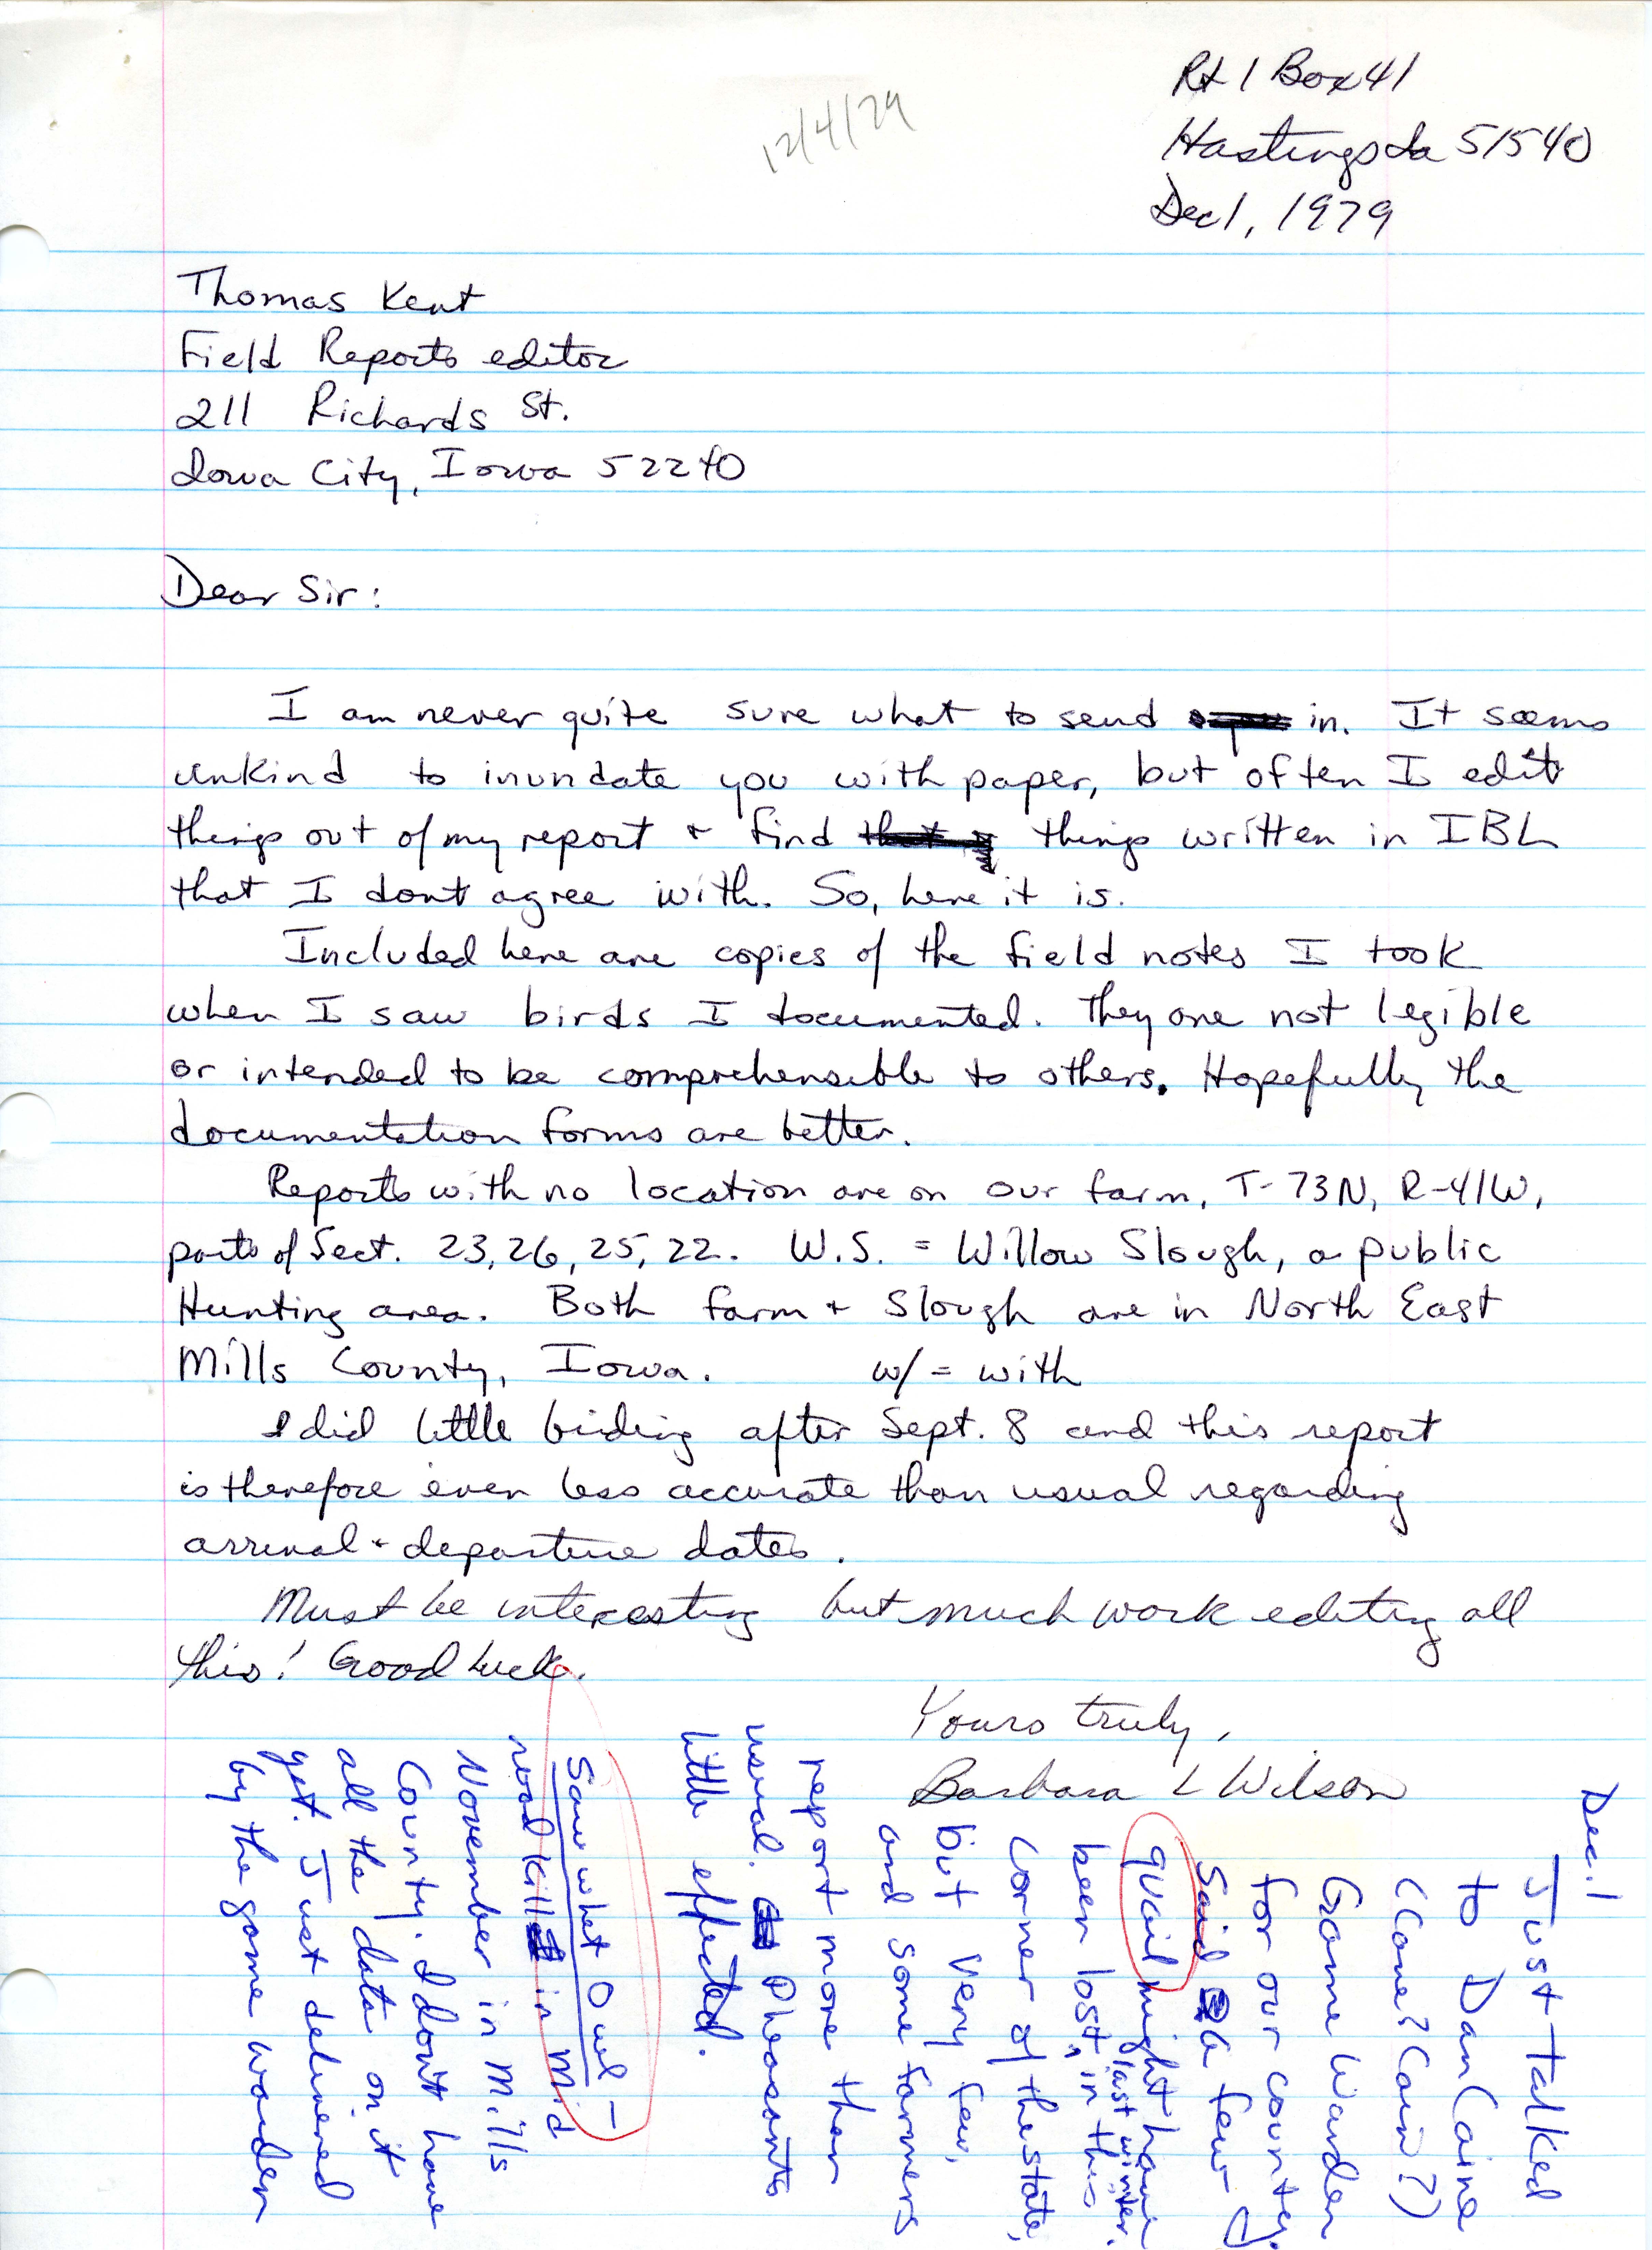 Barbara L. Wilson letter to Thomas H. Kent regarding bird sightings, December 1, 1979.